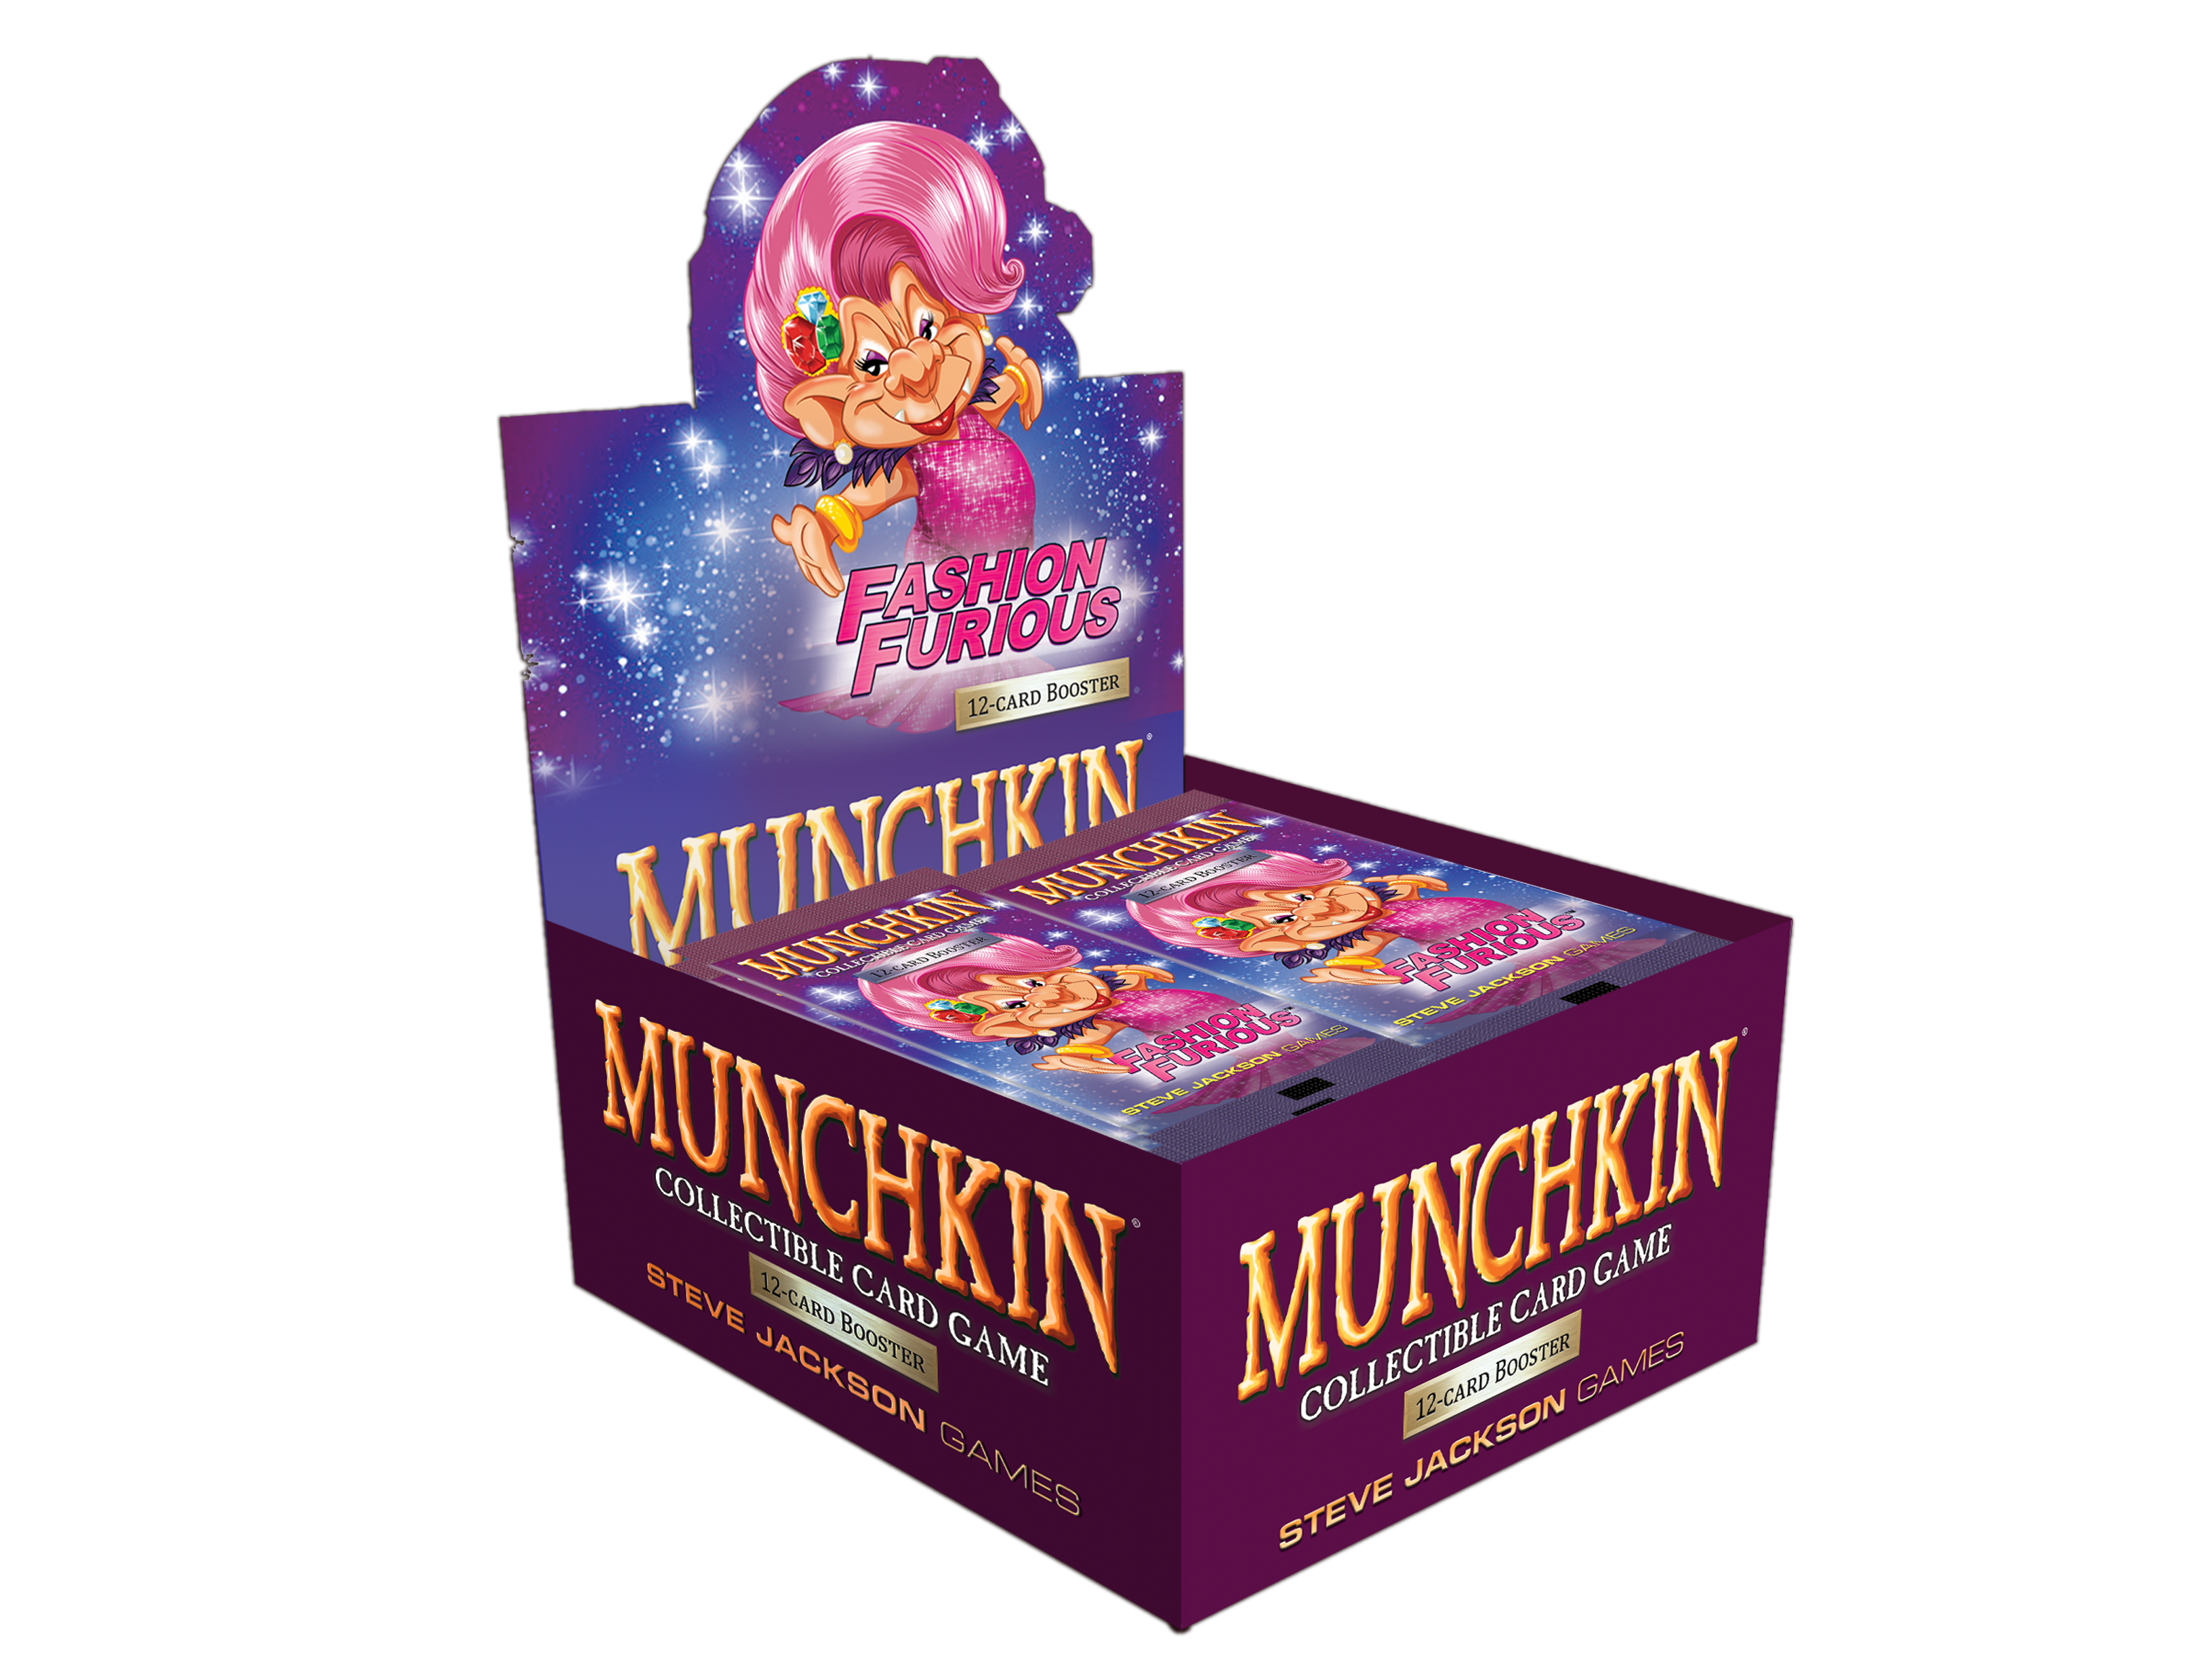 Munchkin Collectible Card Game: Fashion Furious POP Display